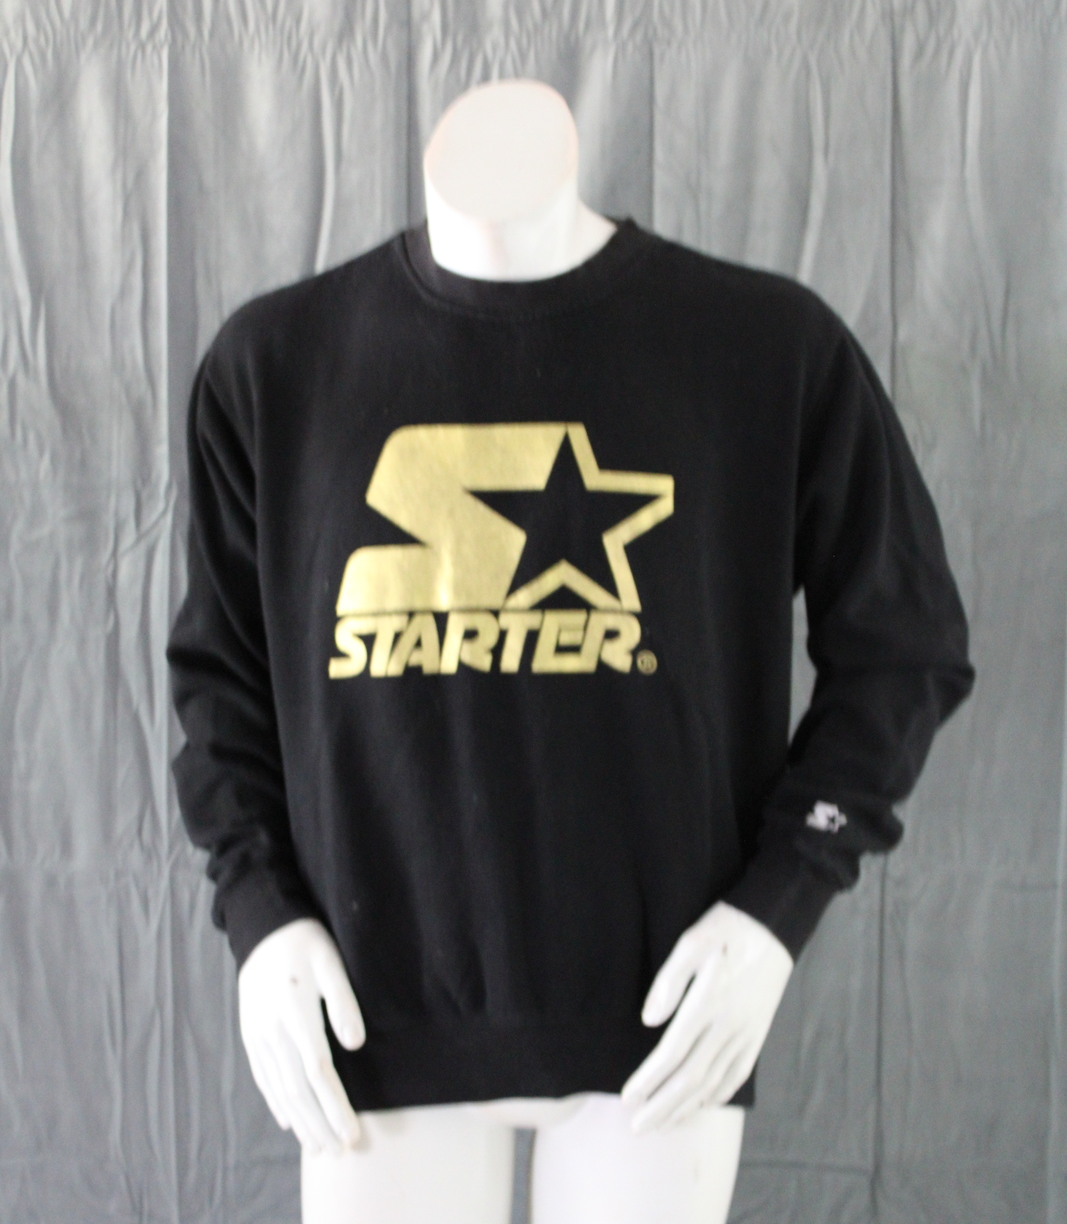 Starter Black Label Sweater - Gold Starter Logo - Men's Large - $59.00